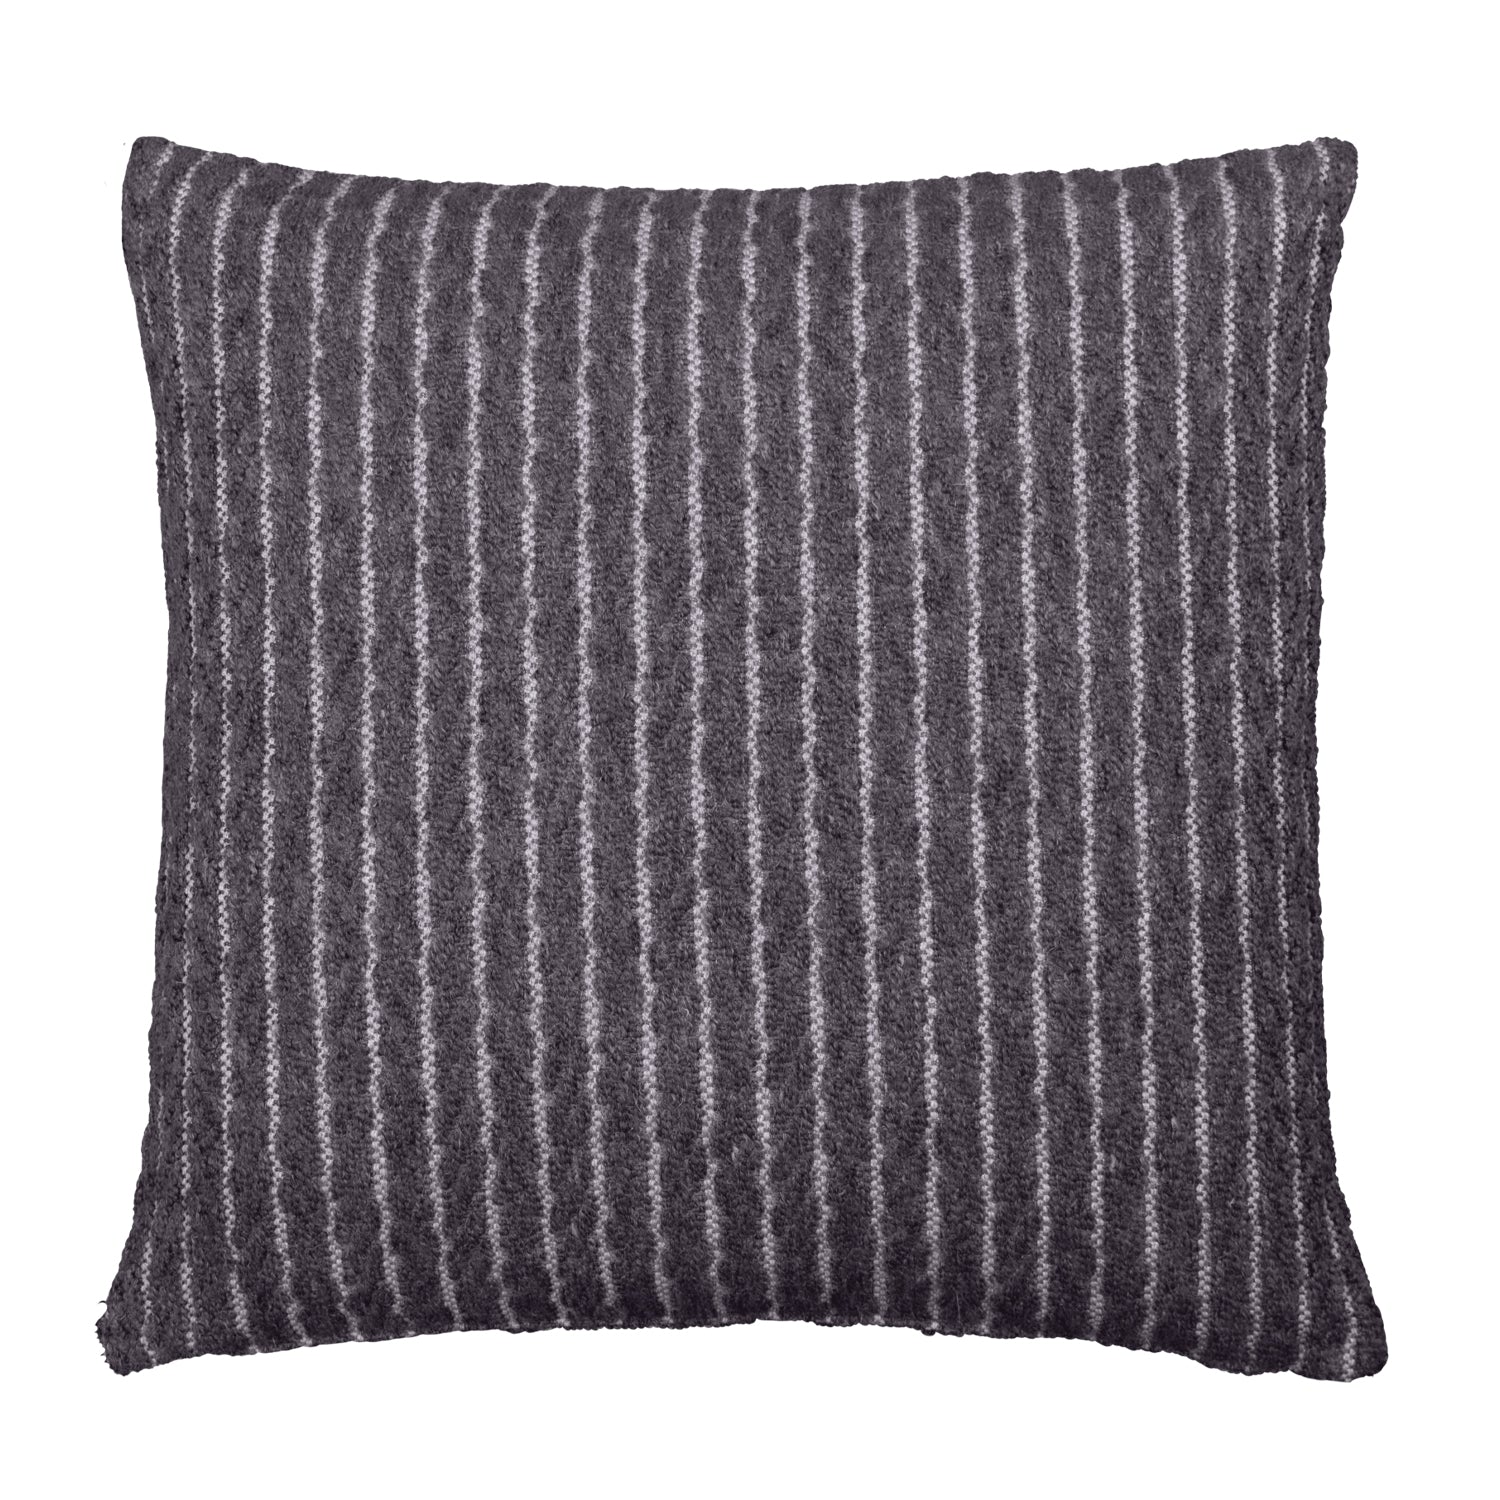 Braid Grey Scatter Cushion - Large